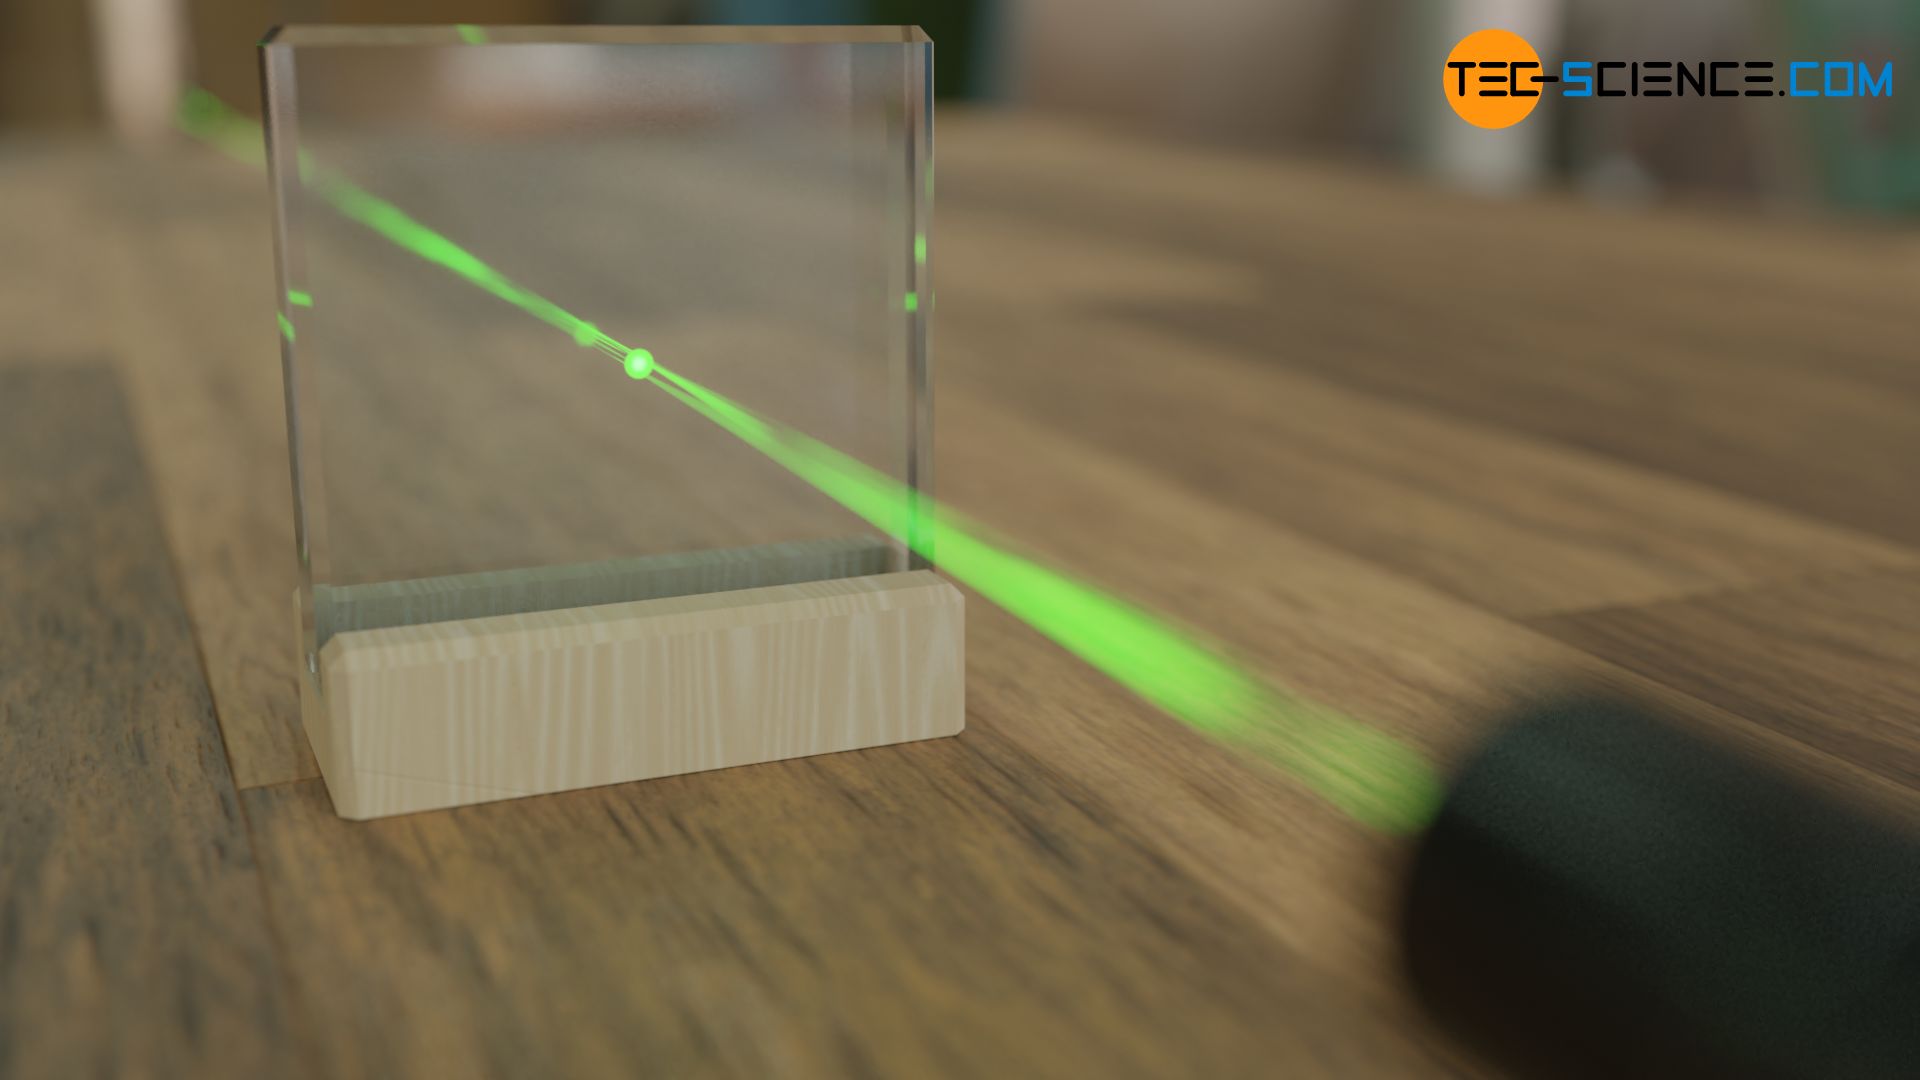 Transmission of light through glass